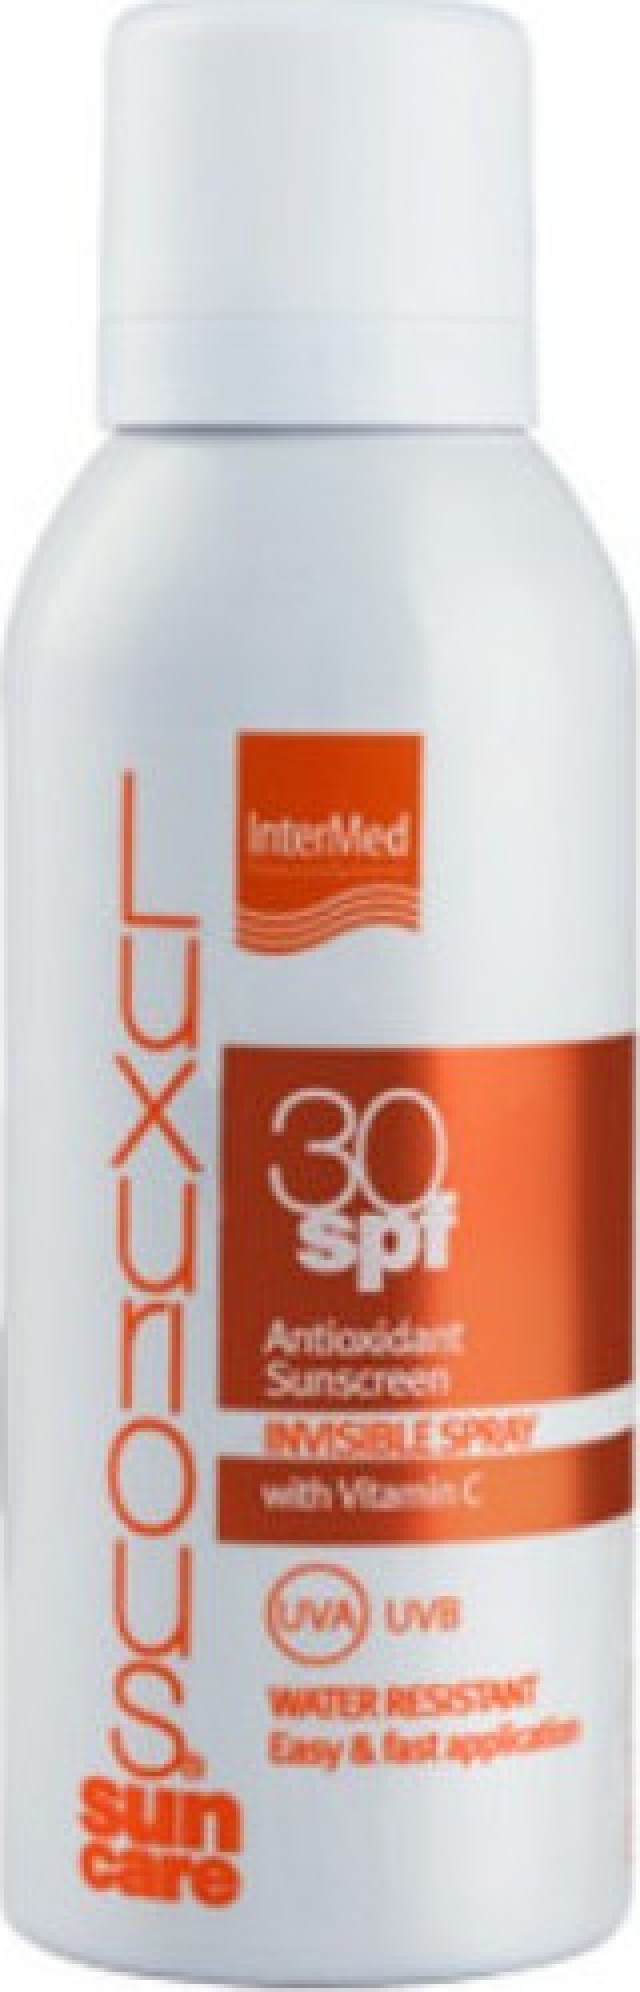 Intermed - Luxurious Sun Care Antioxidant Sunscreen Invisible Spray SPF30 100ml